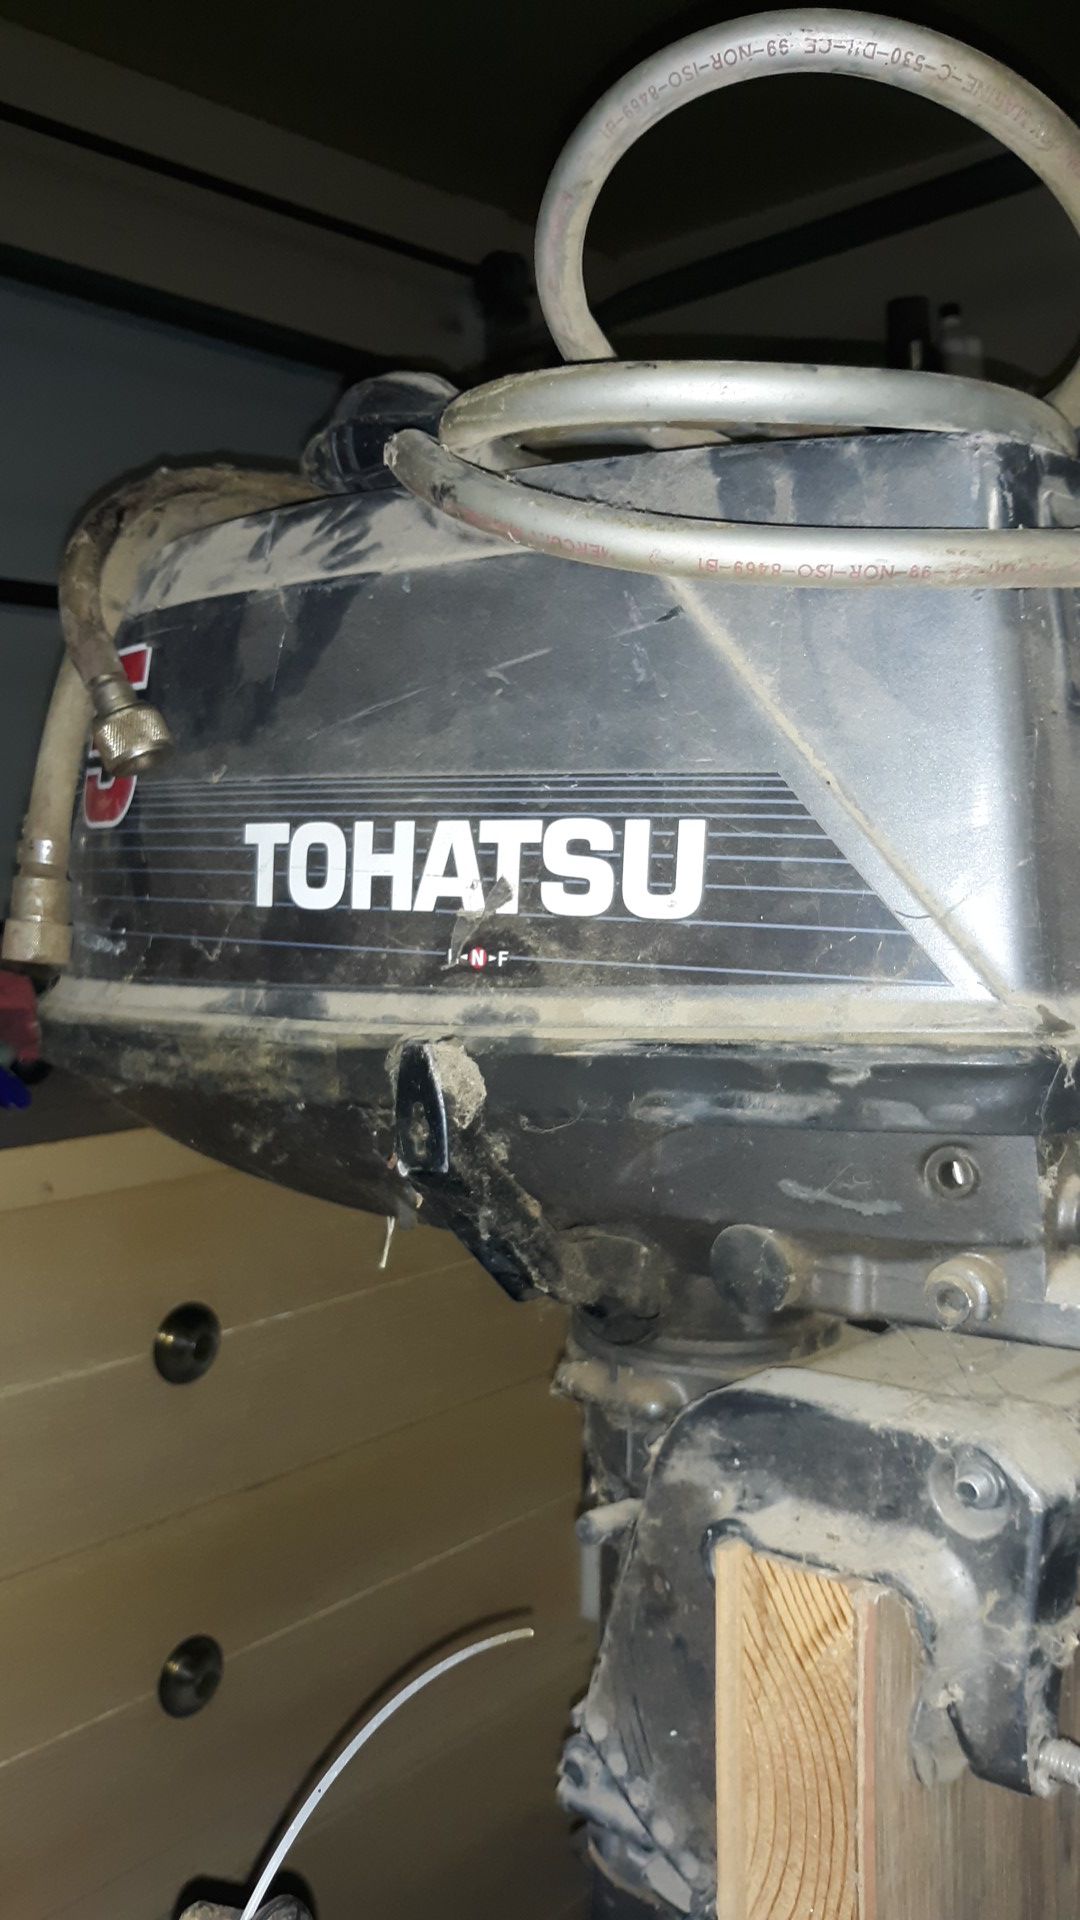 Tohatsu M5B 369 5hp outboard motor